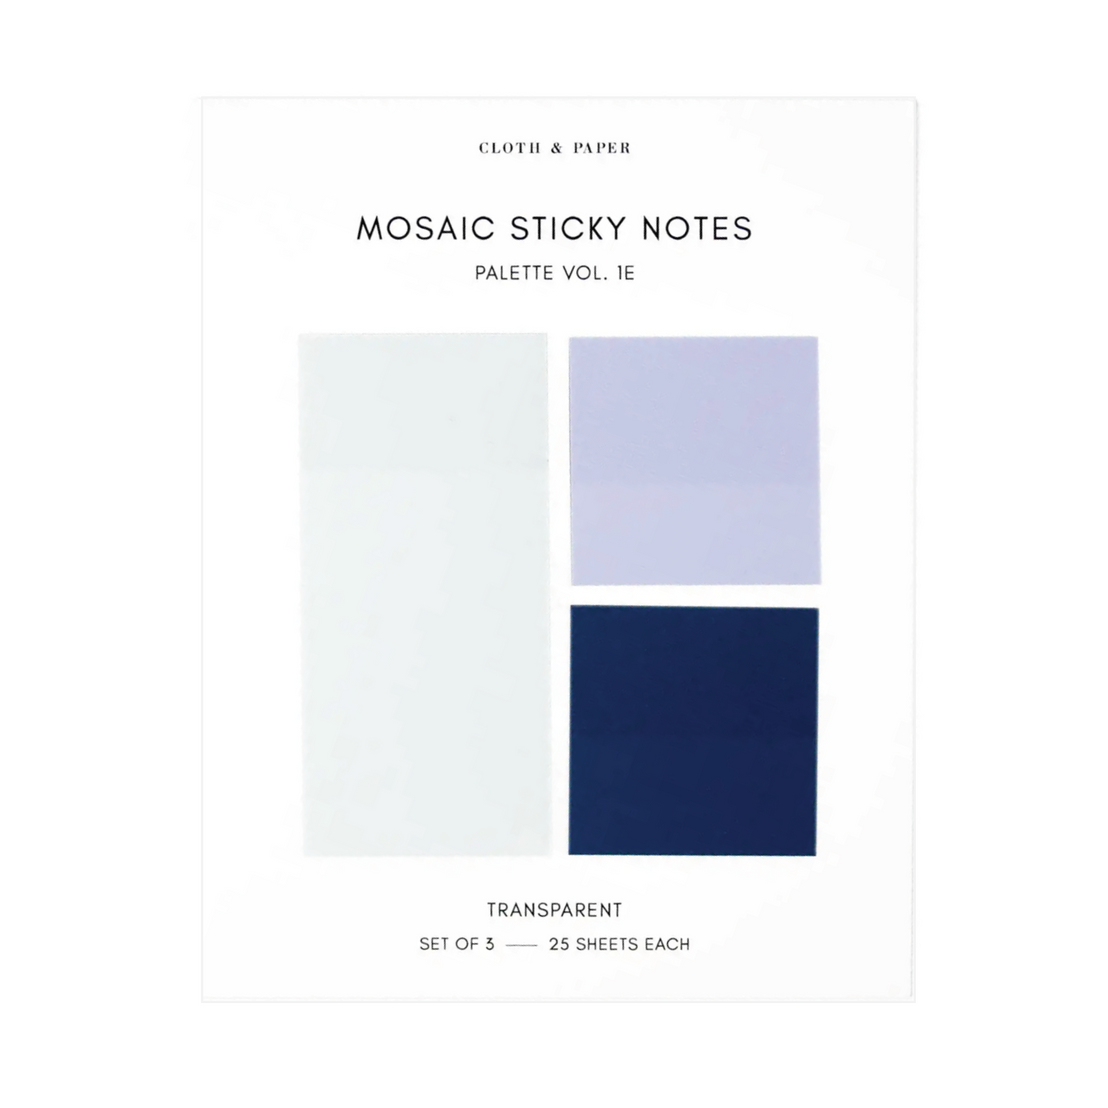 Mosaic Sticky Notes Vol 1E